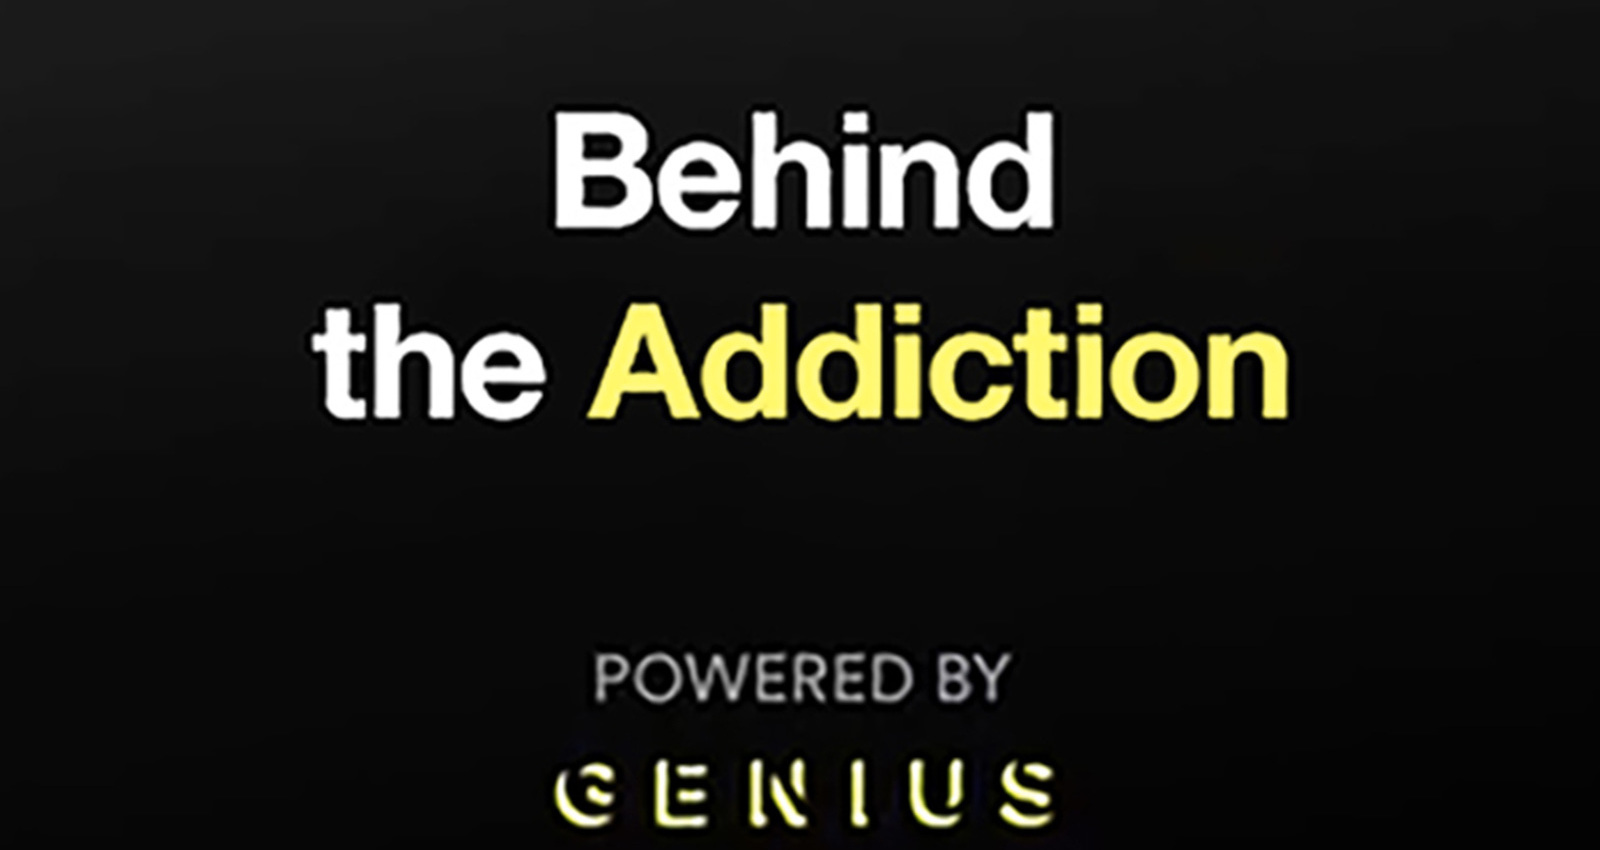 Behind the addiction